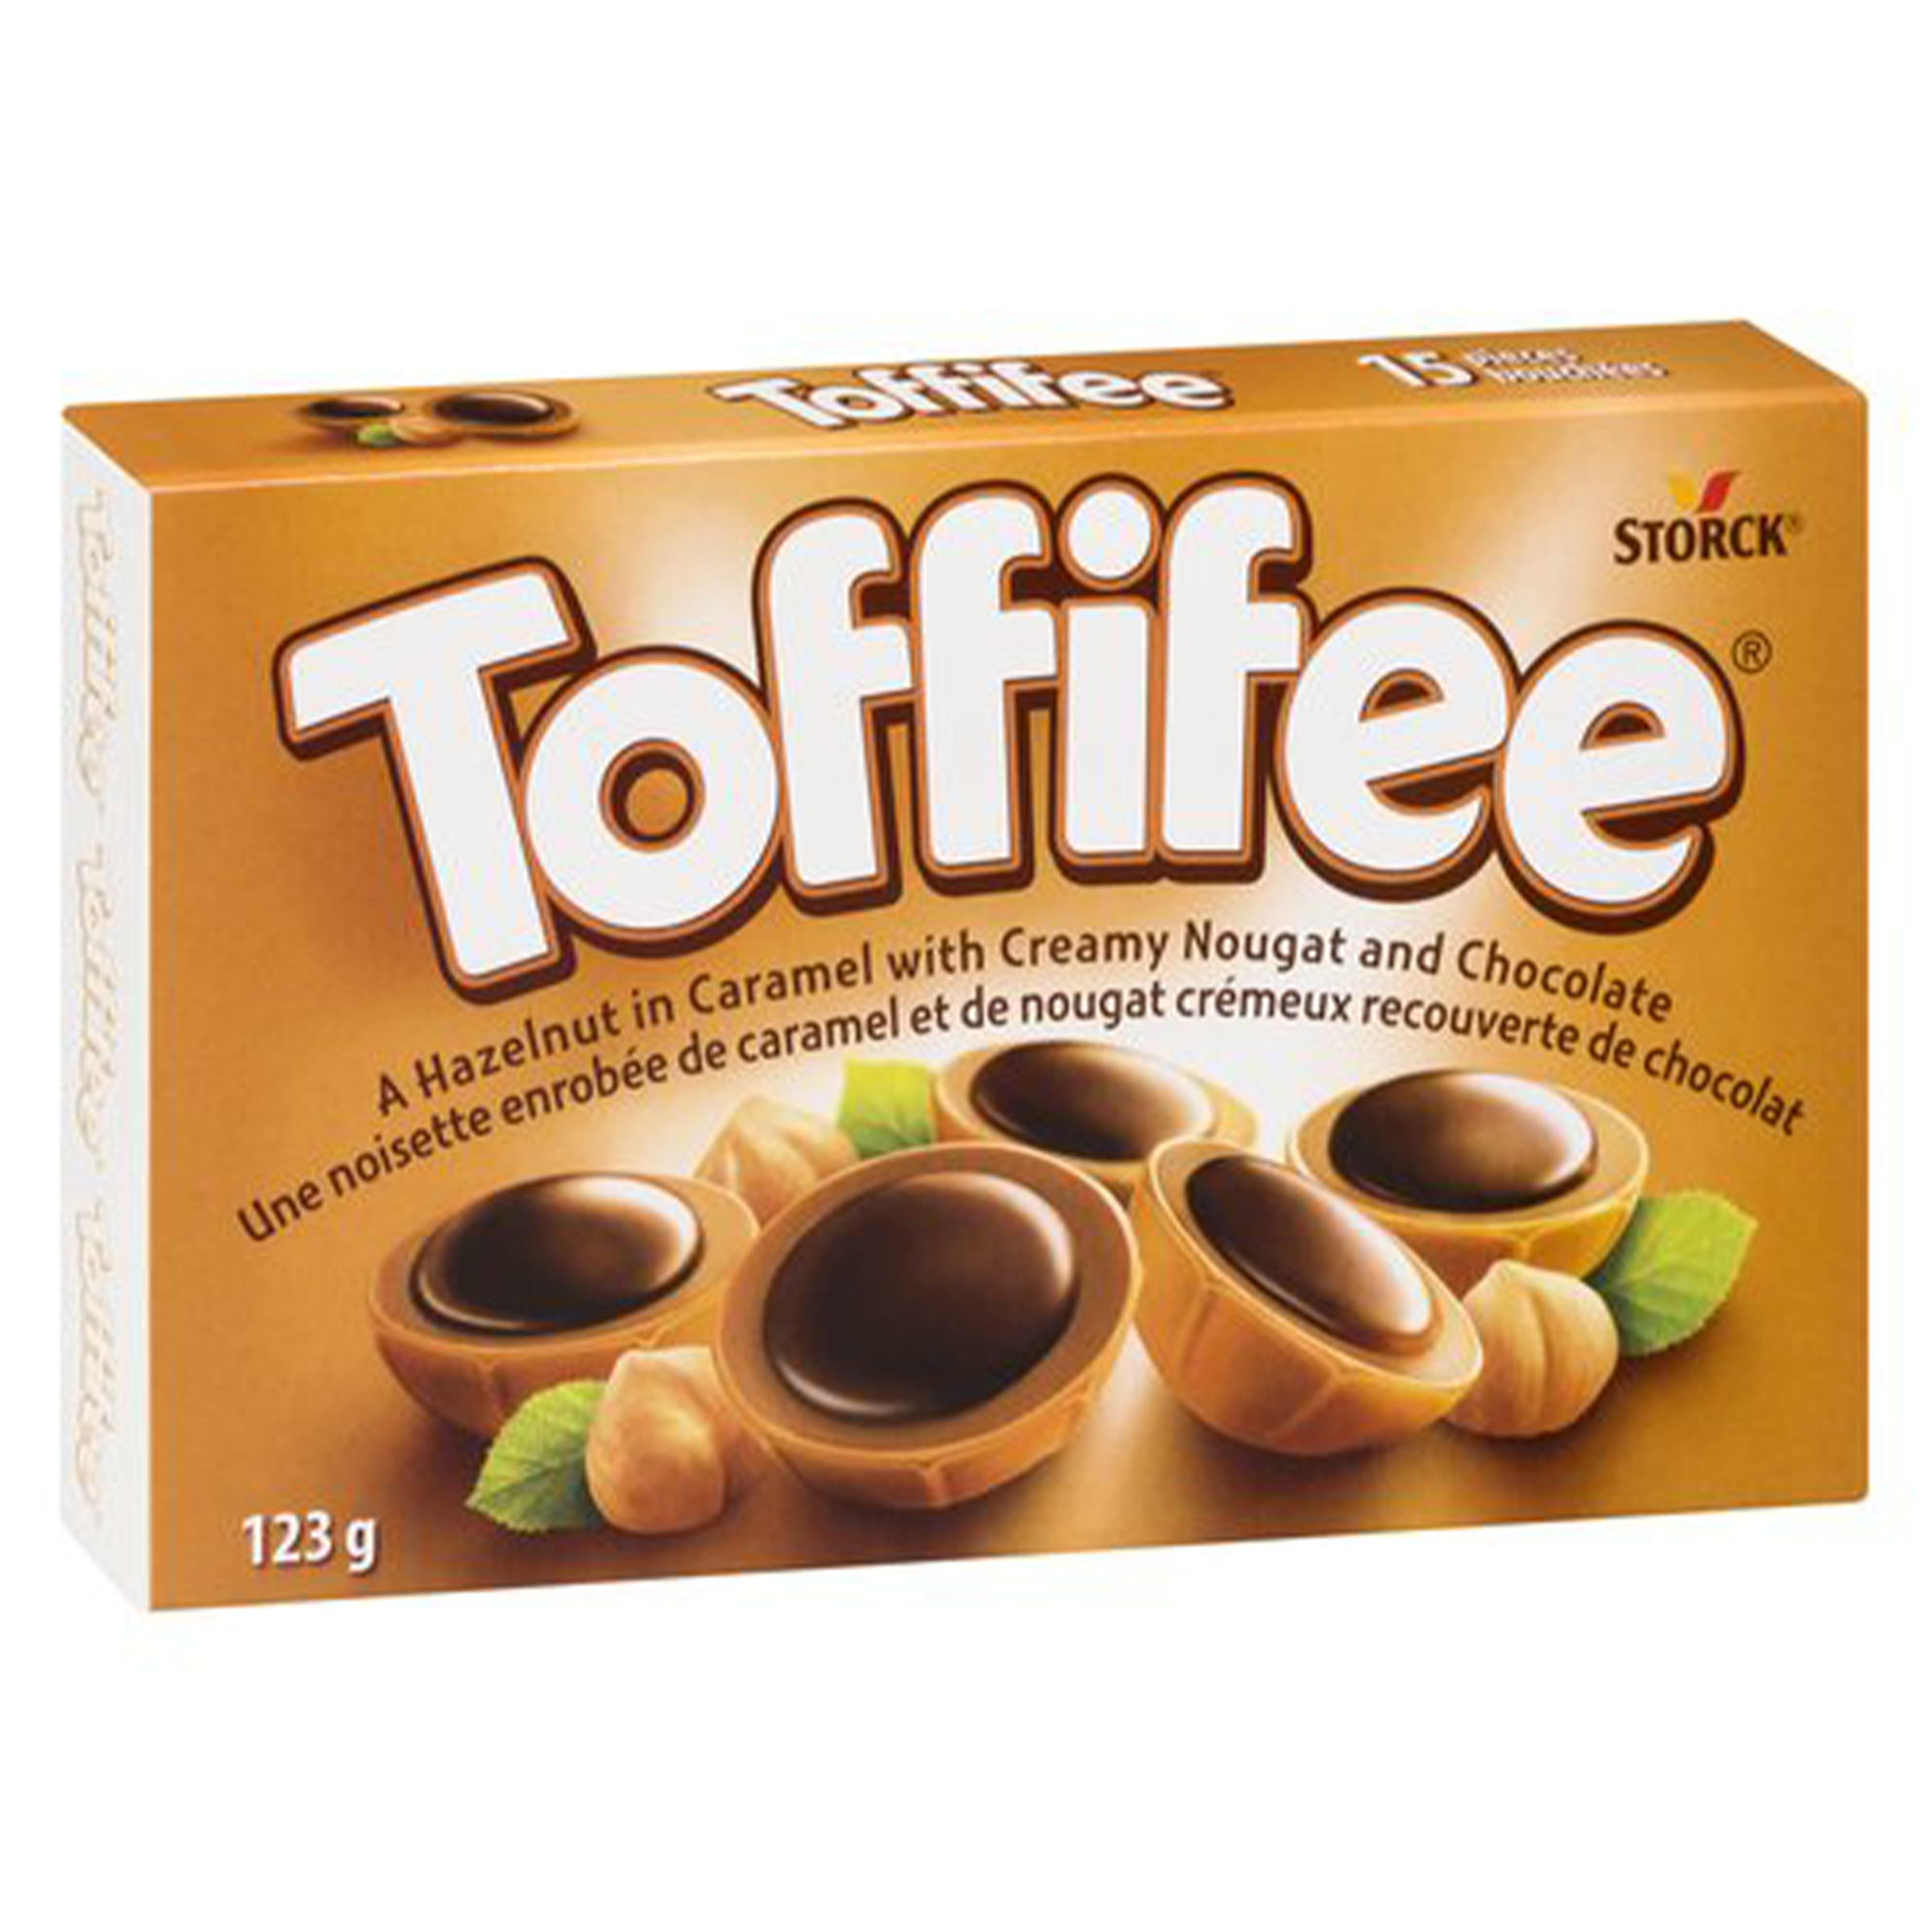 Toffifee - Hazelnut